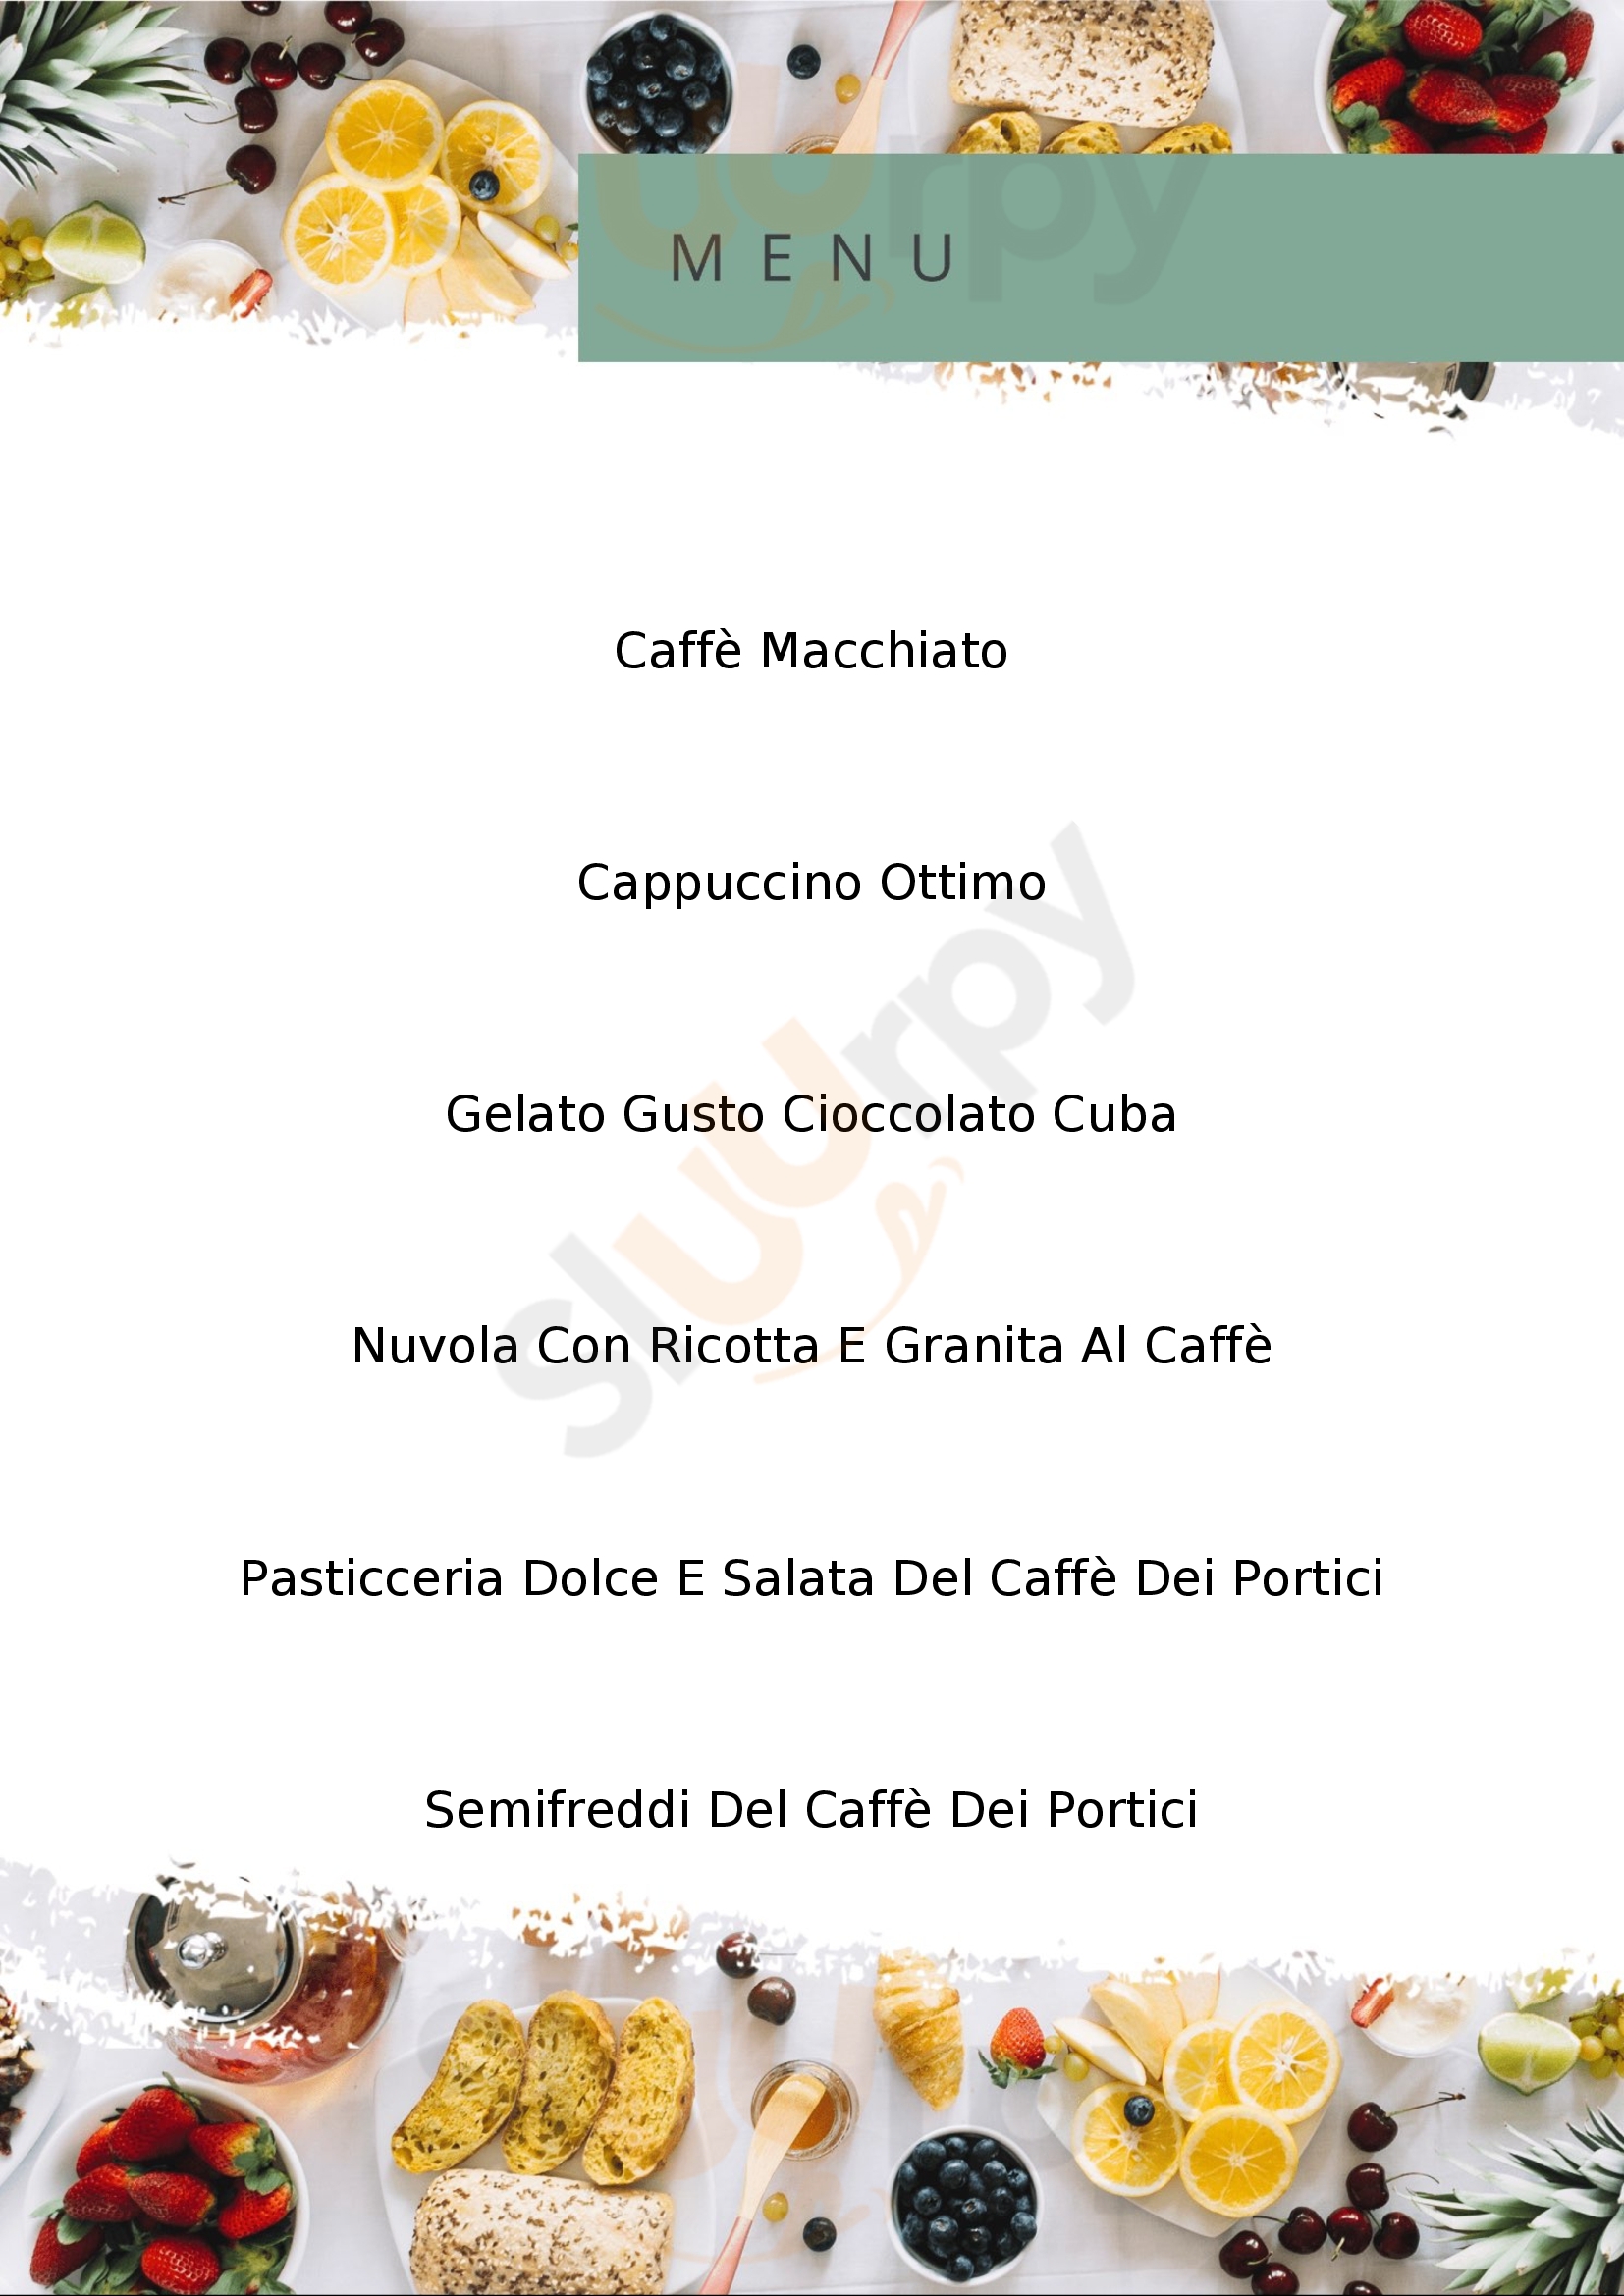 Caffe' Portici Senigallia menù 1 pagina